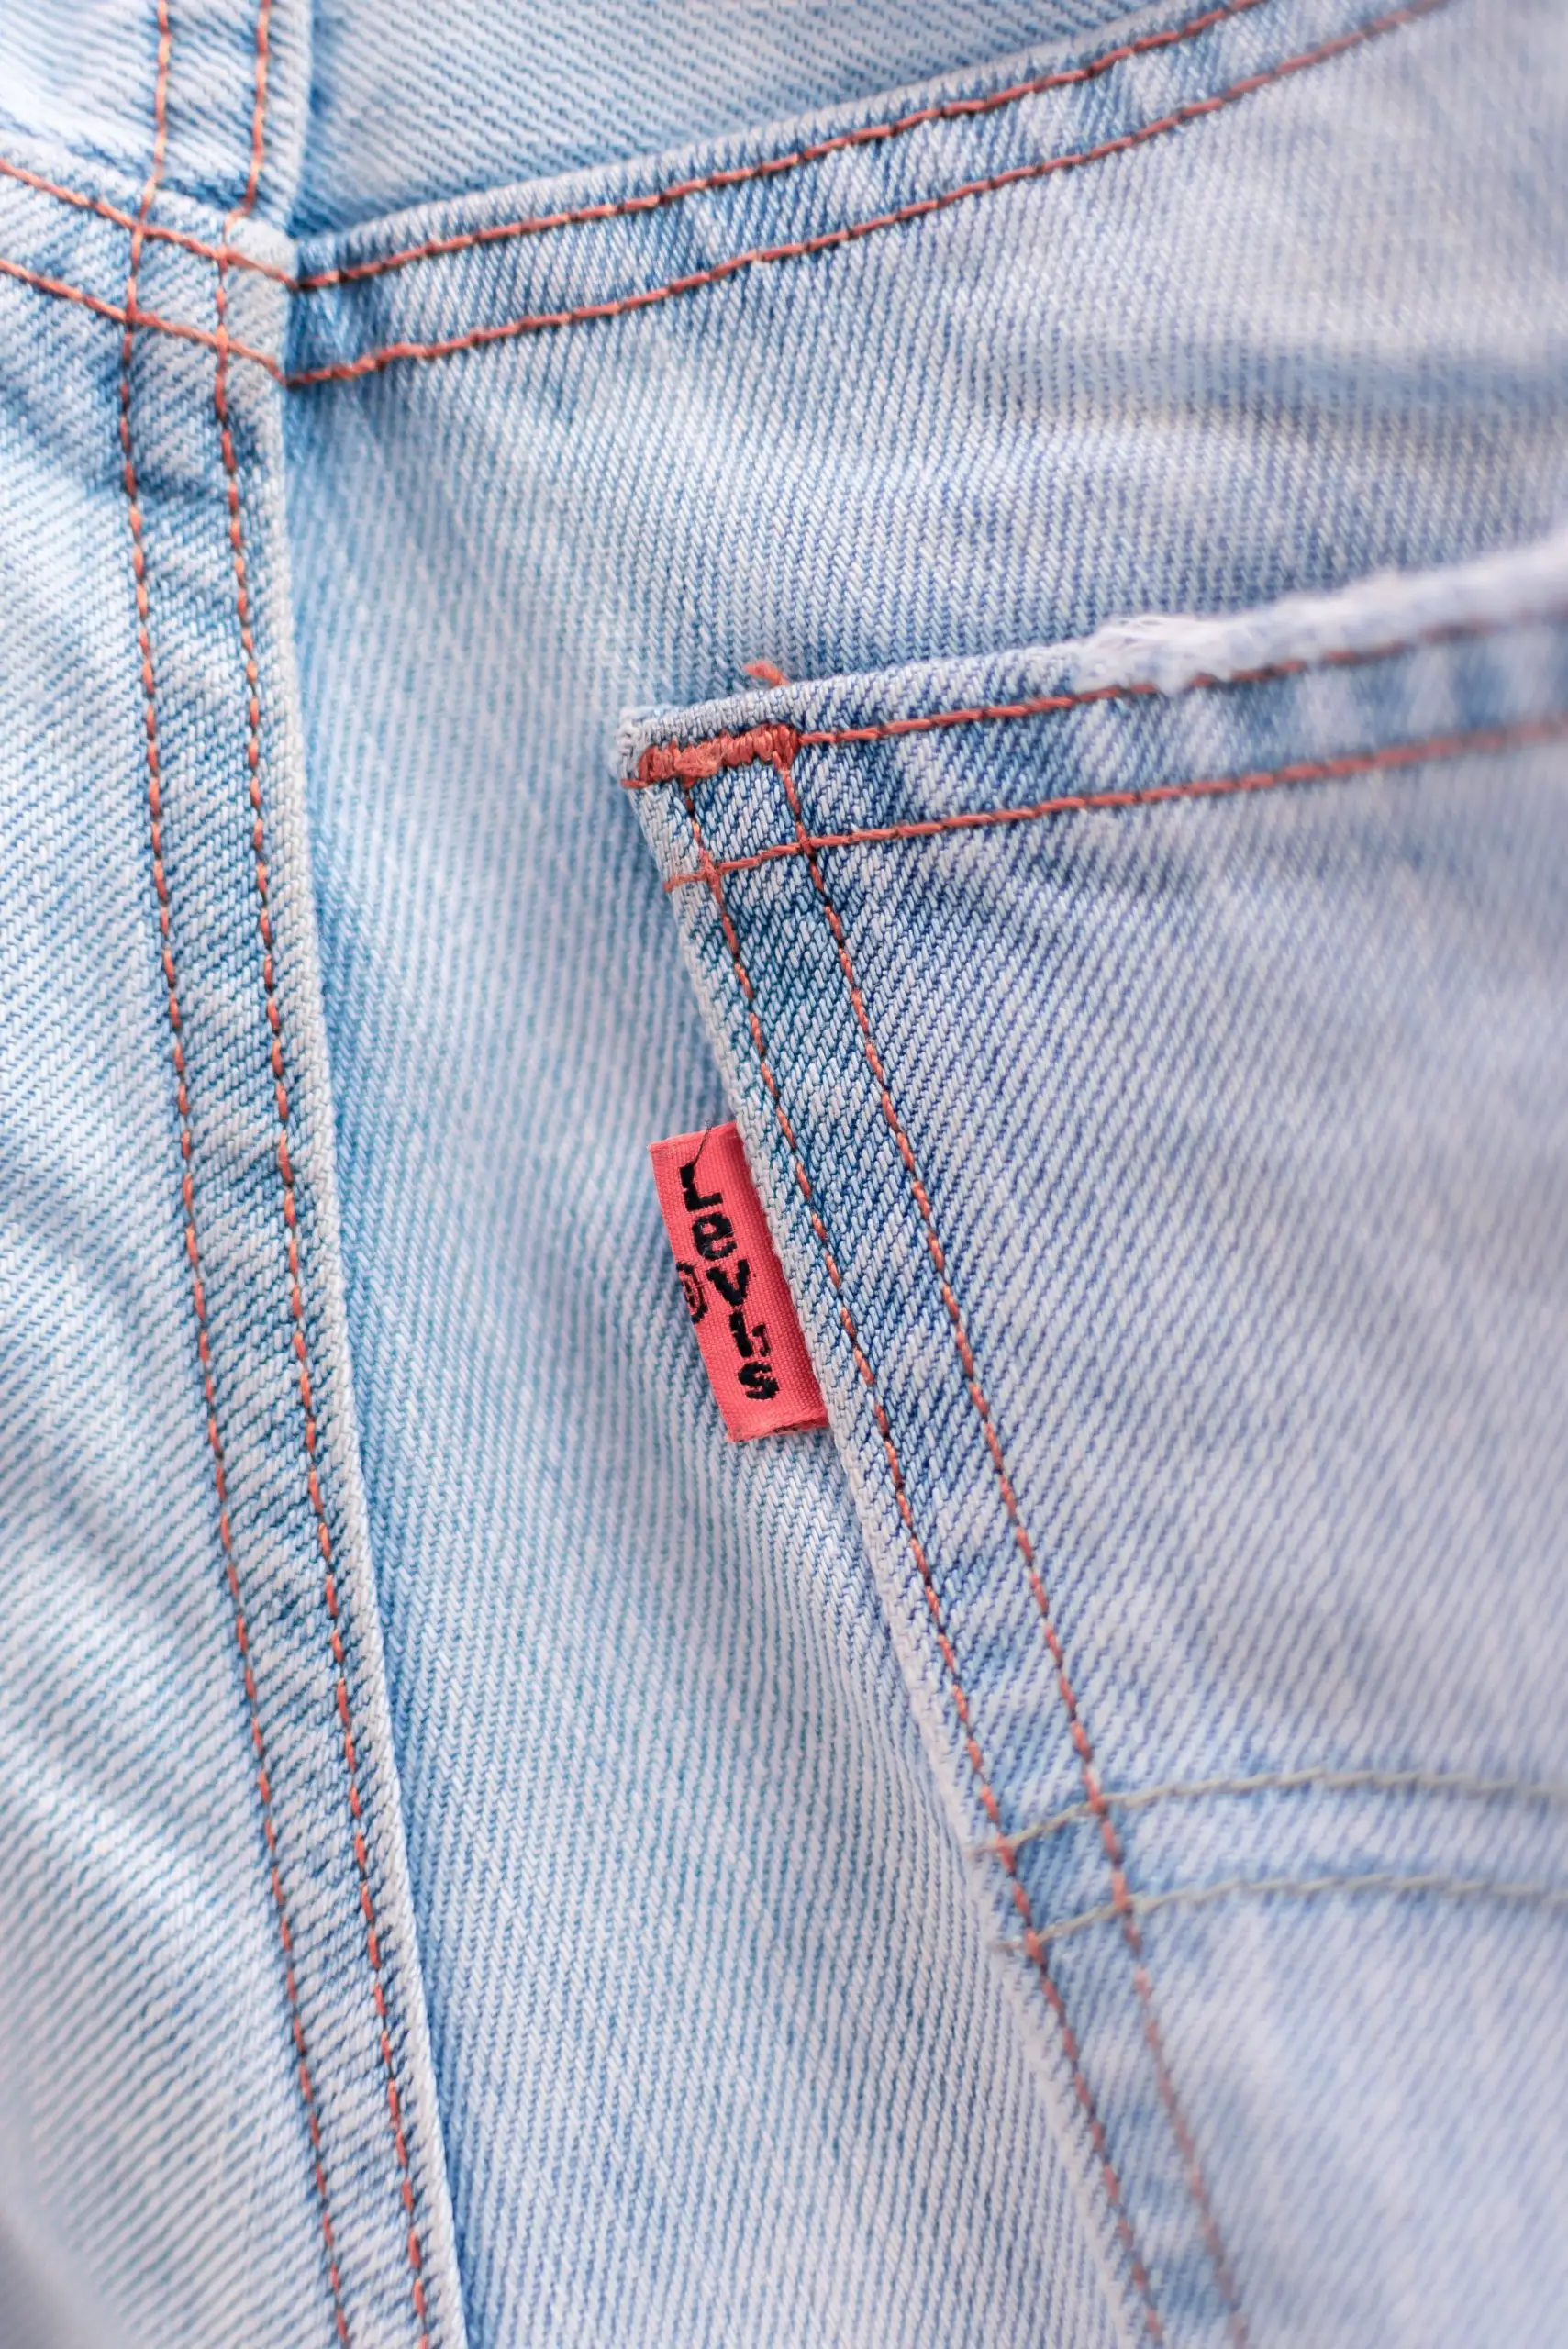 Do Levis Jeans Shrink? Unveiling the Secrets of Levi's Denim Shrinking ...